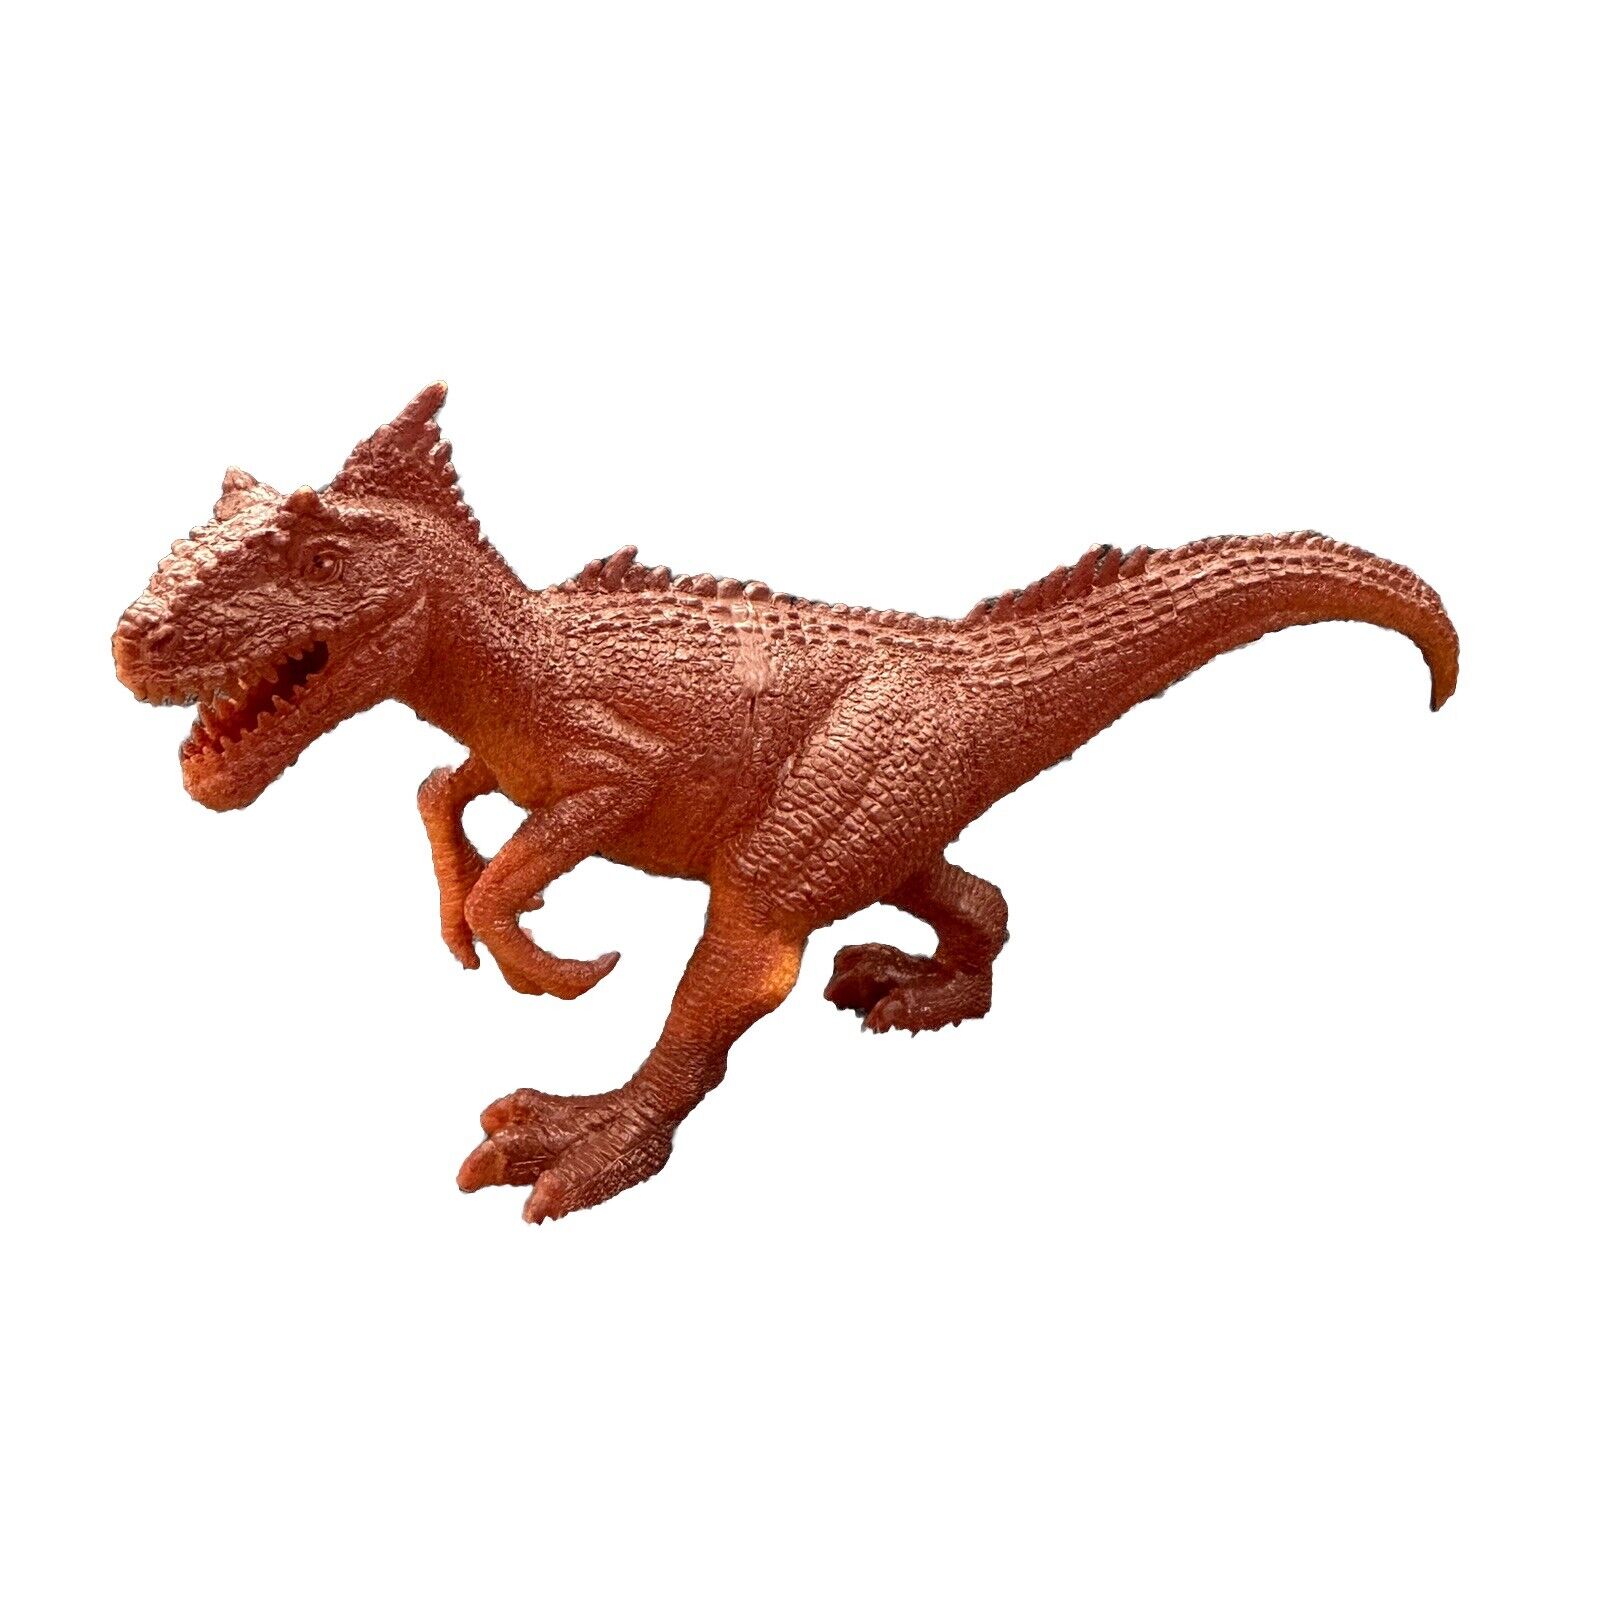 Boley Acrocanthosaurus  Dinosaur Toy Figure TM04 Jun22 Pre-owned